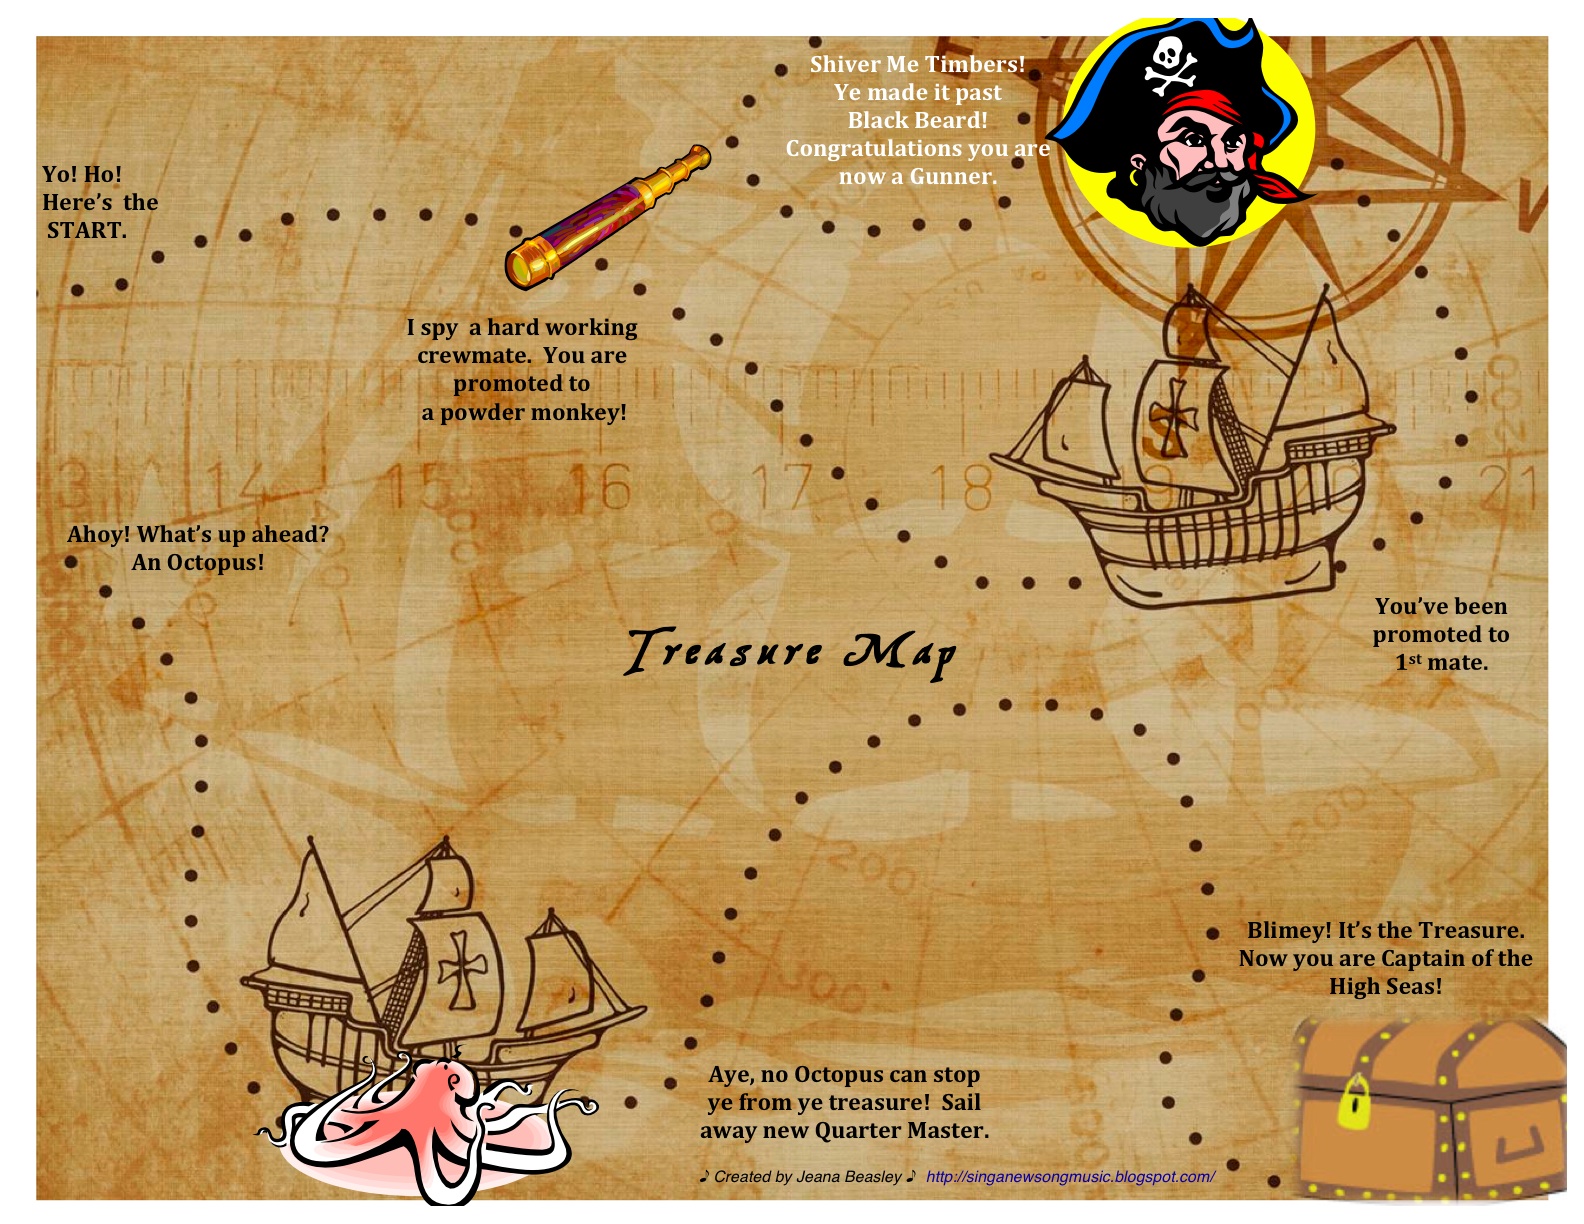 Treasure Map Treasure Maps Map Activities Treasure Maps For Kids Images